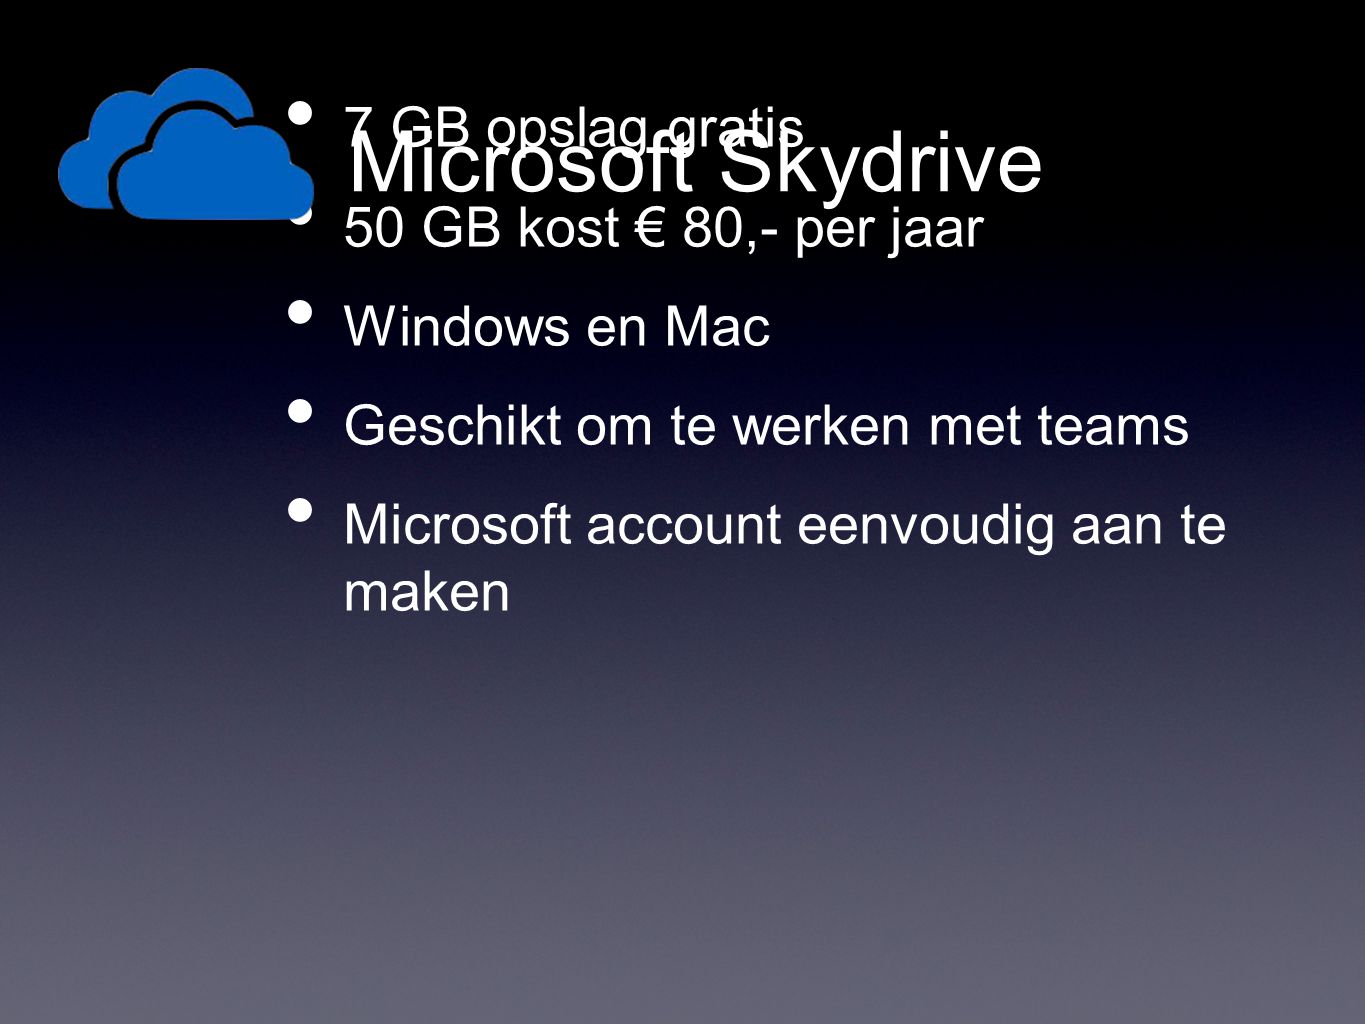 Microsoft Skydrive • 7 GB opslag gratis • 50 GB kost € 80,- per jaar • Windows en Mac • Geschikt om te werken met teams • Microsoft account eenvoudig aan te maken